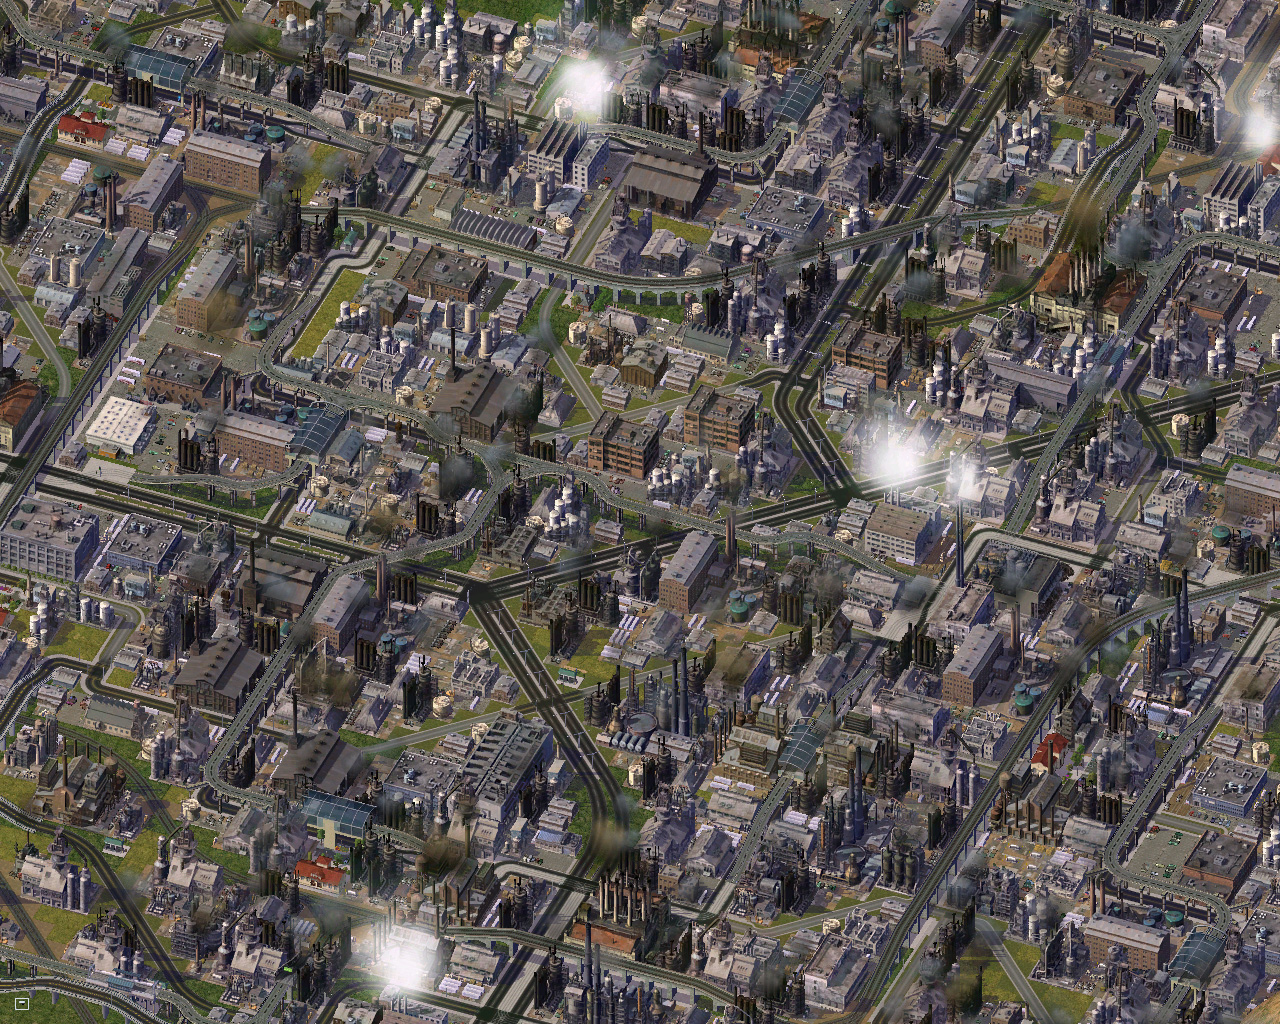 sim settlements industrial city